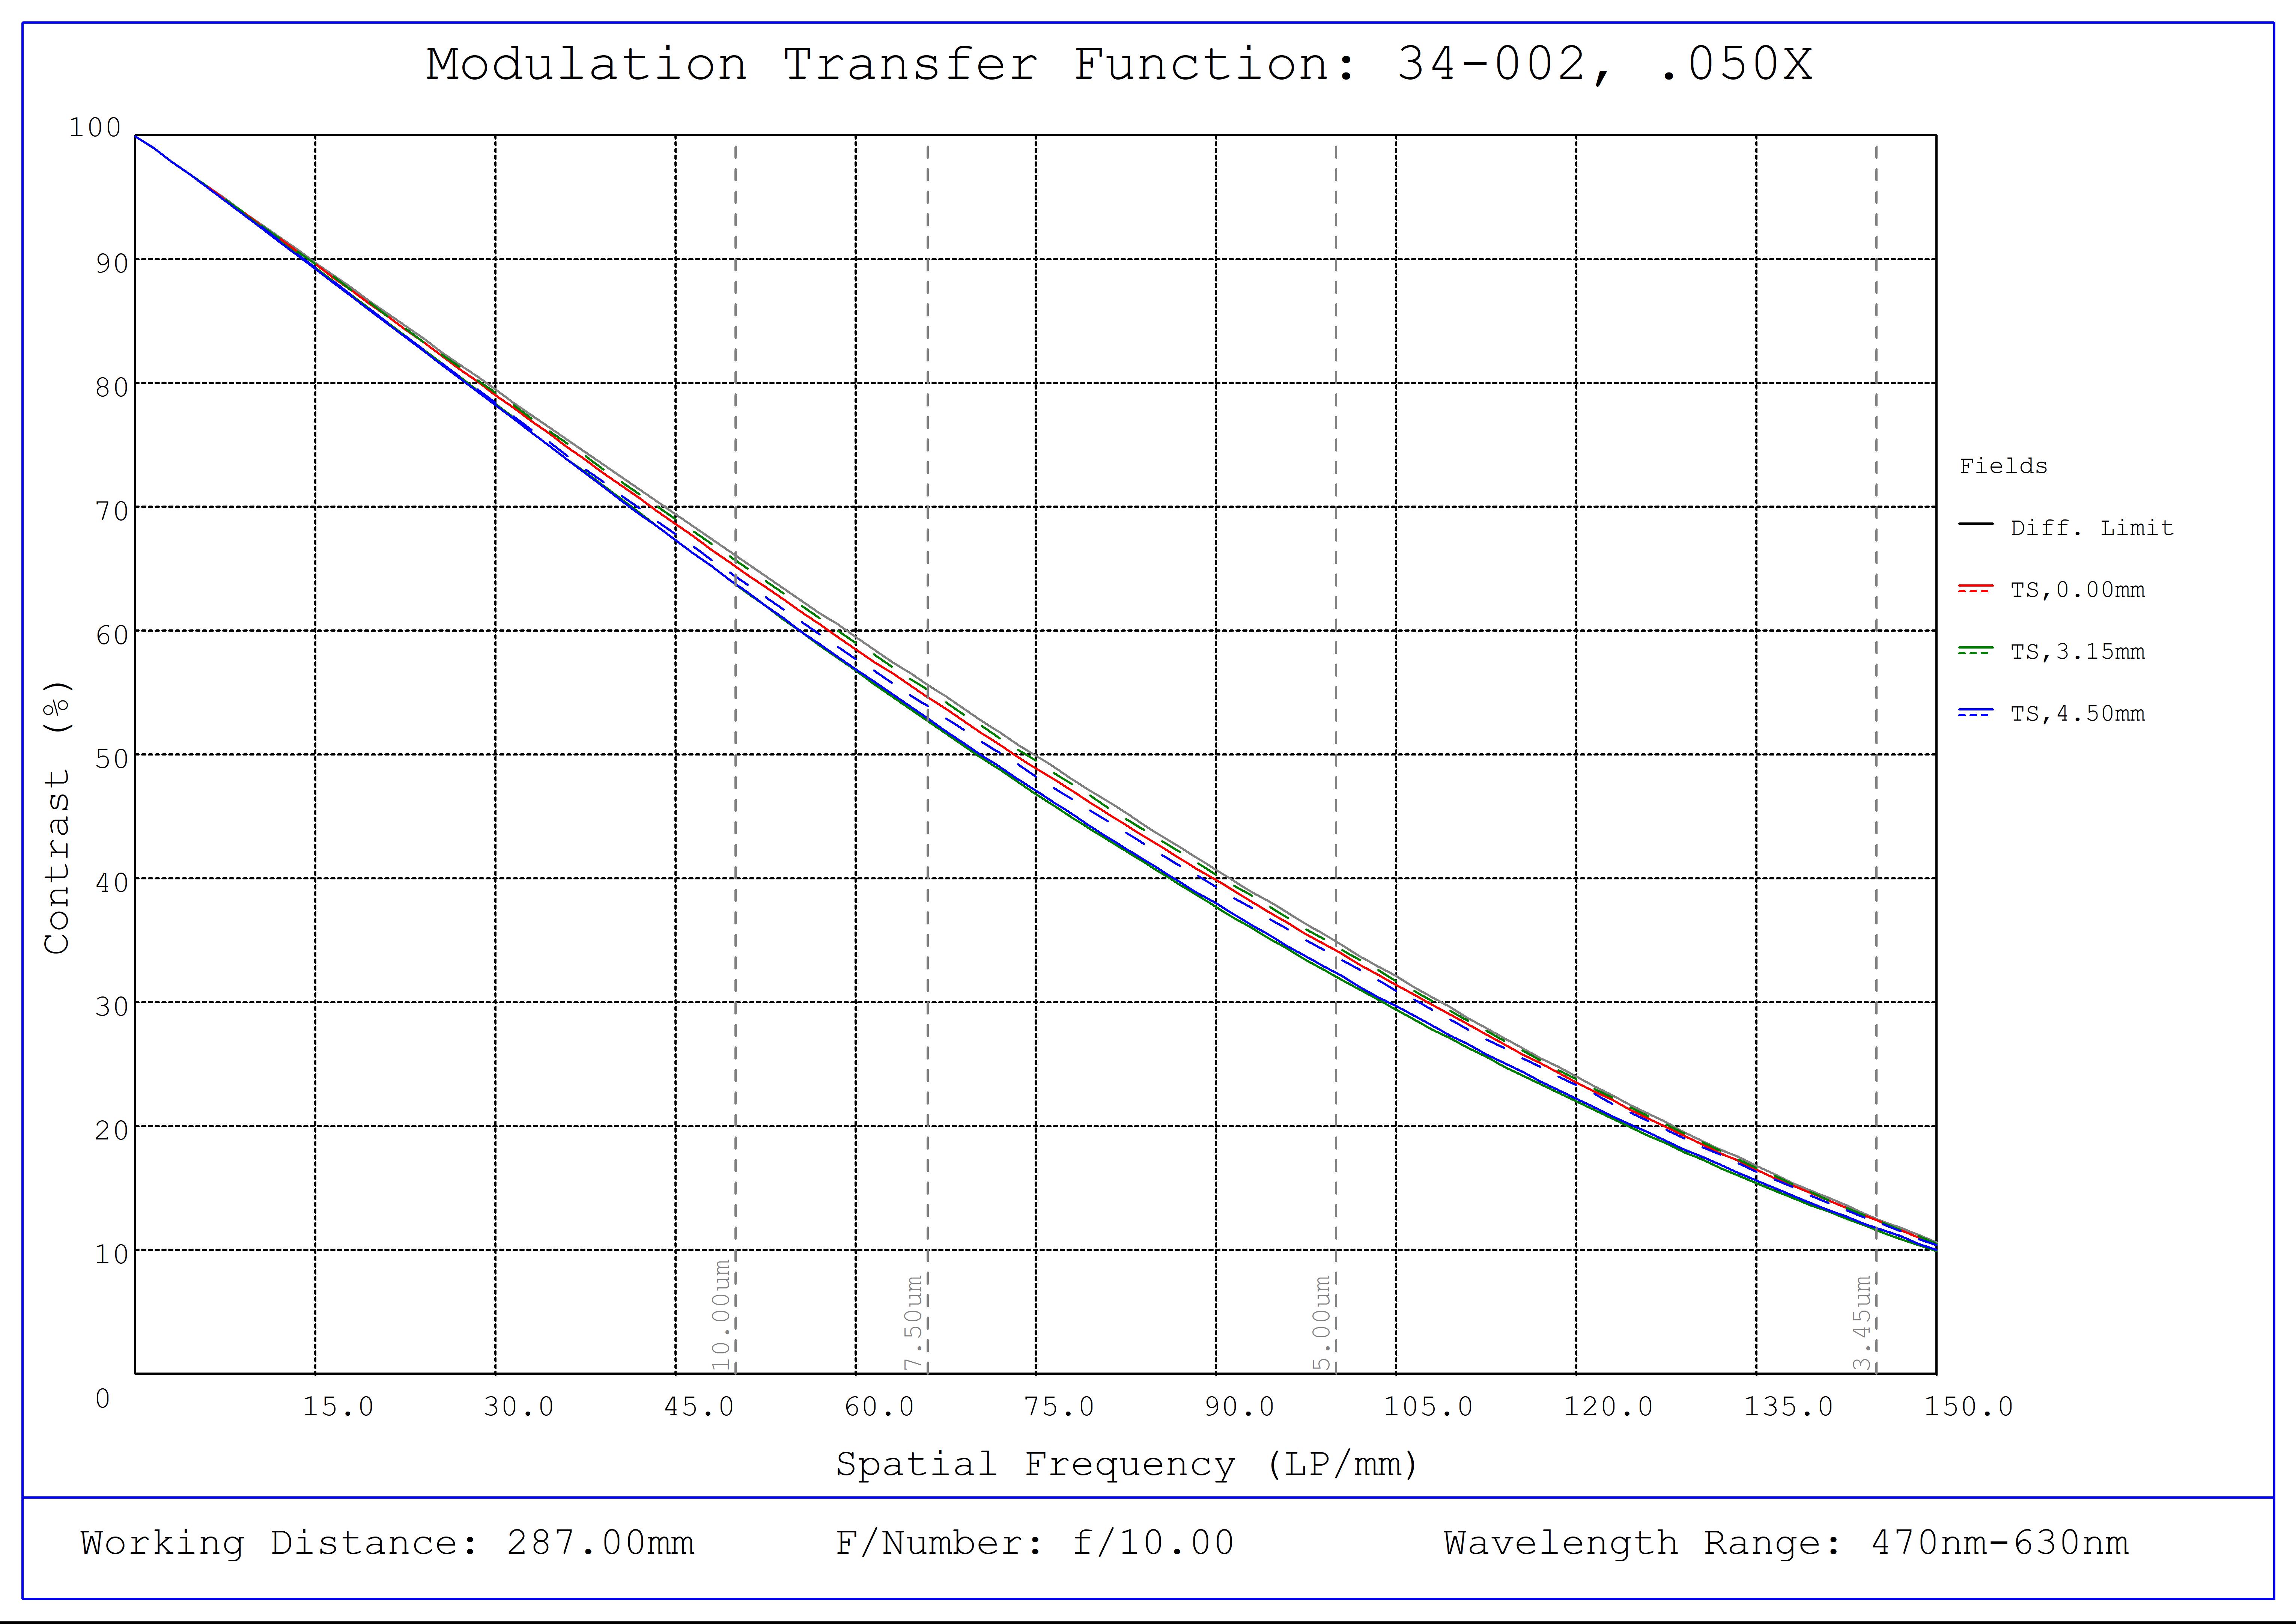 #34-002, 0.050X, 1/1.8" C-Mount TitanTL® Telecentric Lens, Modulated Transfer Function (MTF) Plot, 287mm Working Distance, f10